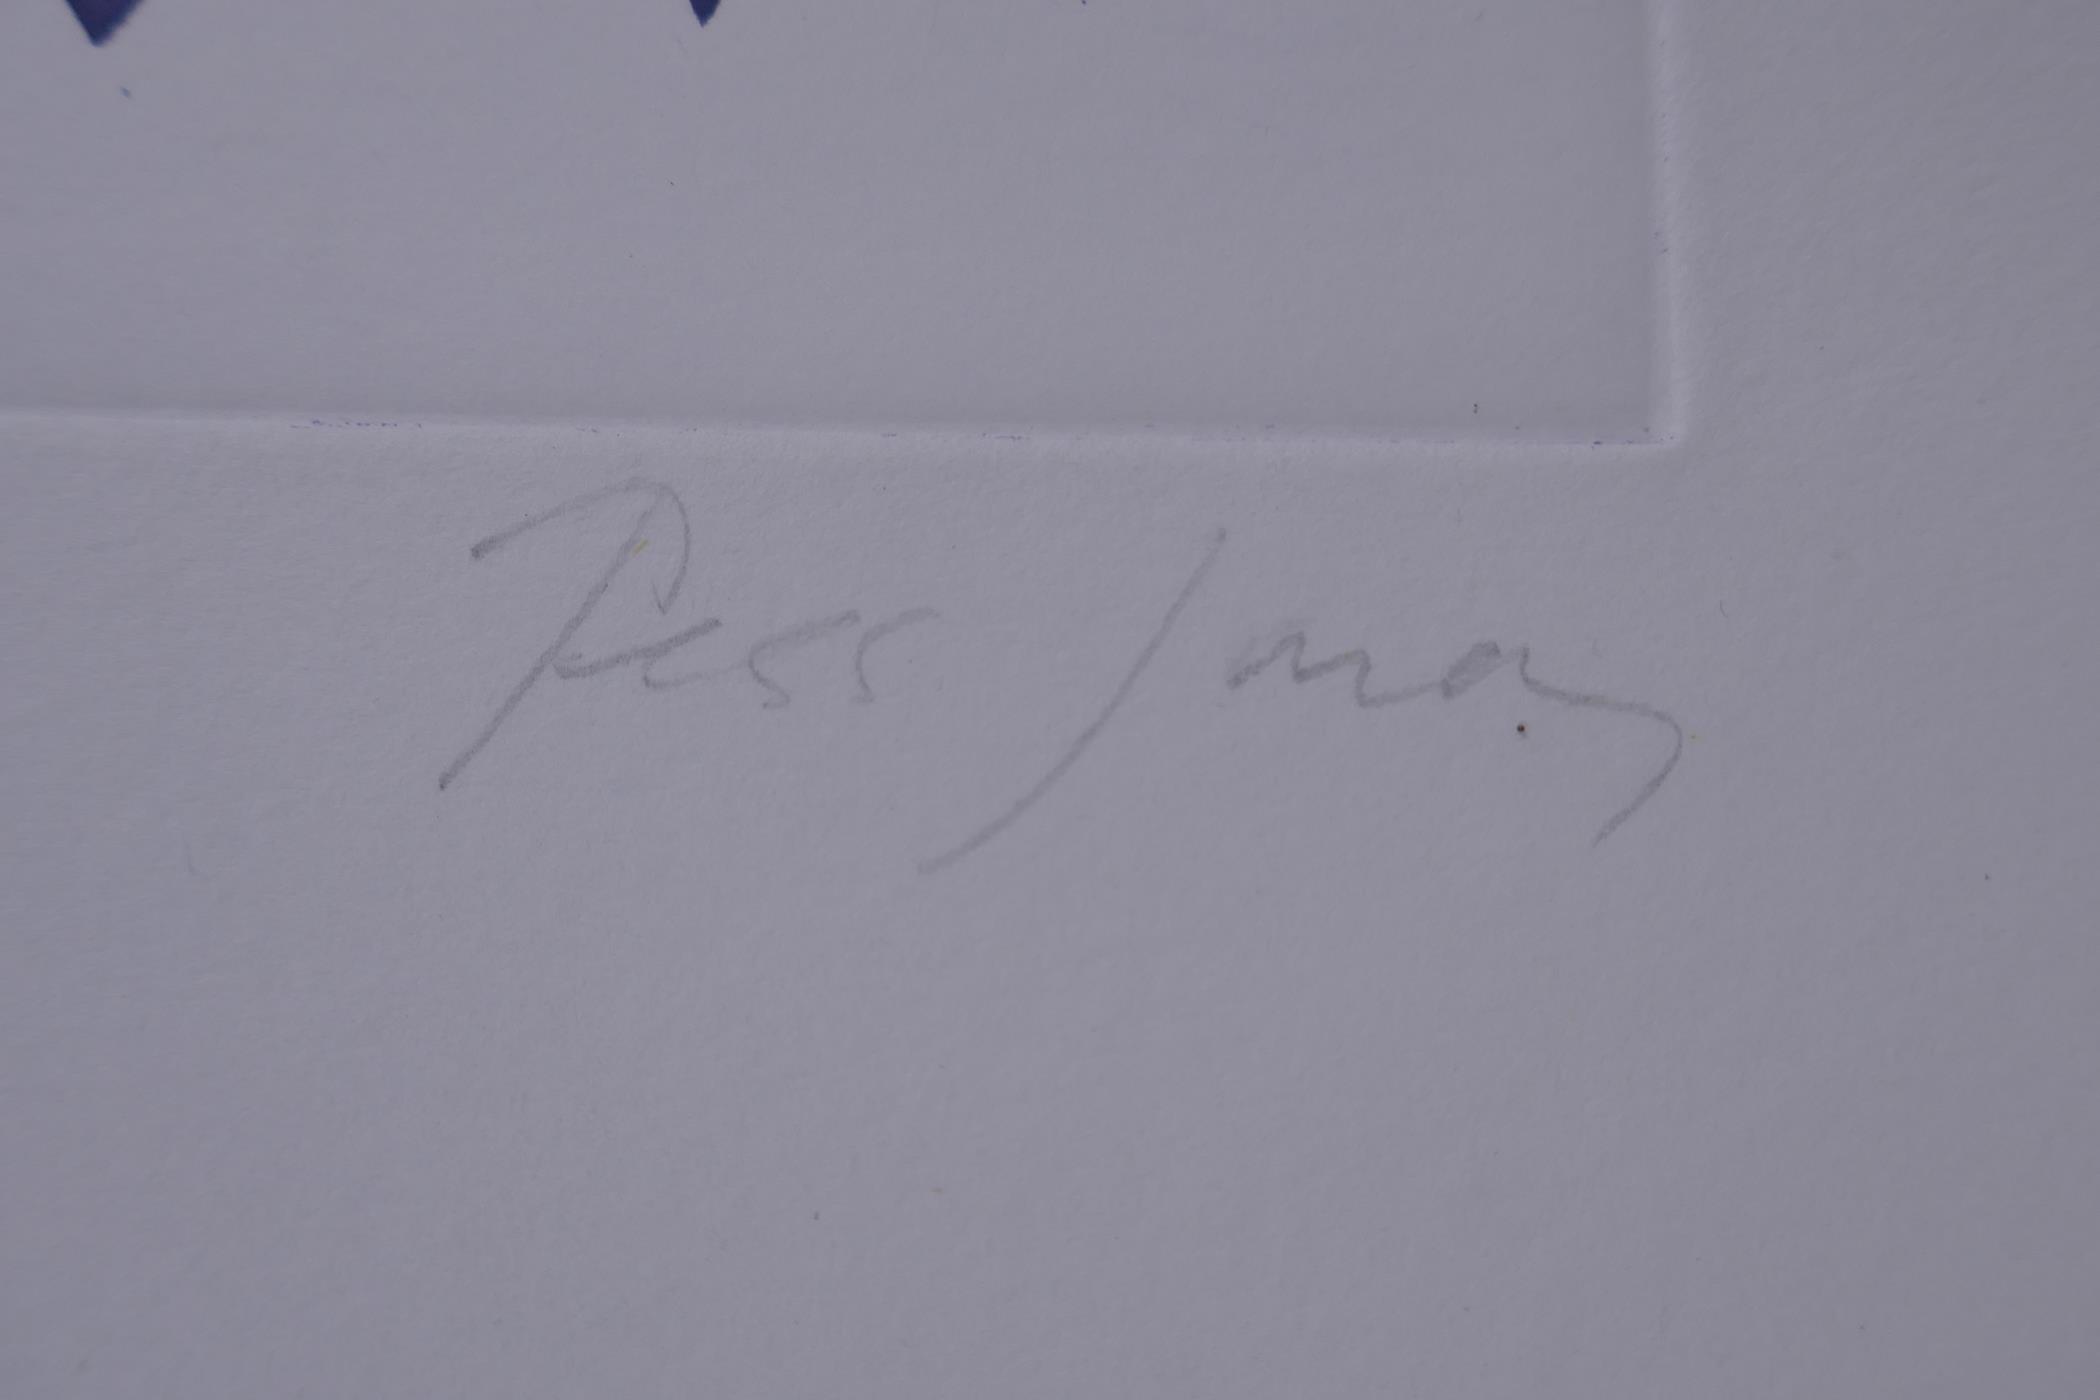 Tess Jaray RA, (British, b.1937), Minaret 1, 1984, printer's proof etching, pencil signed; - Image 3 of 4